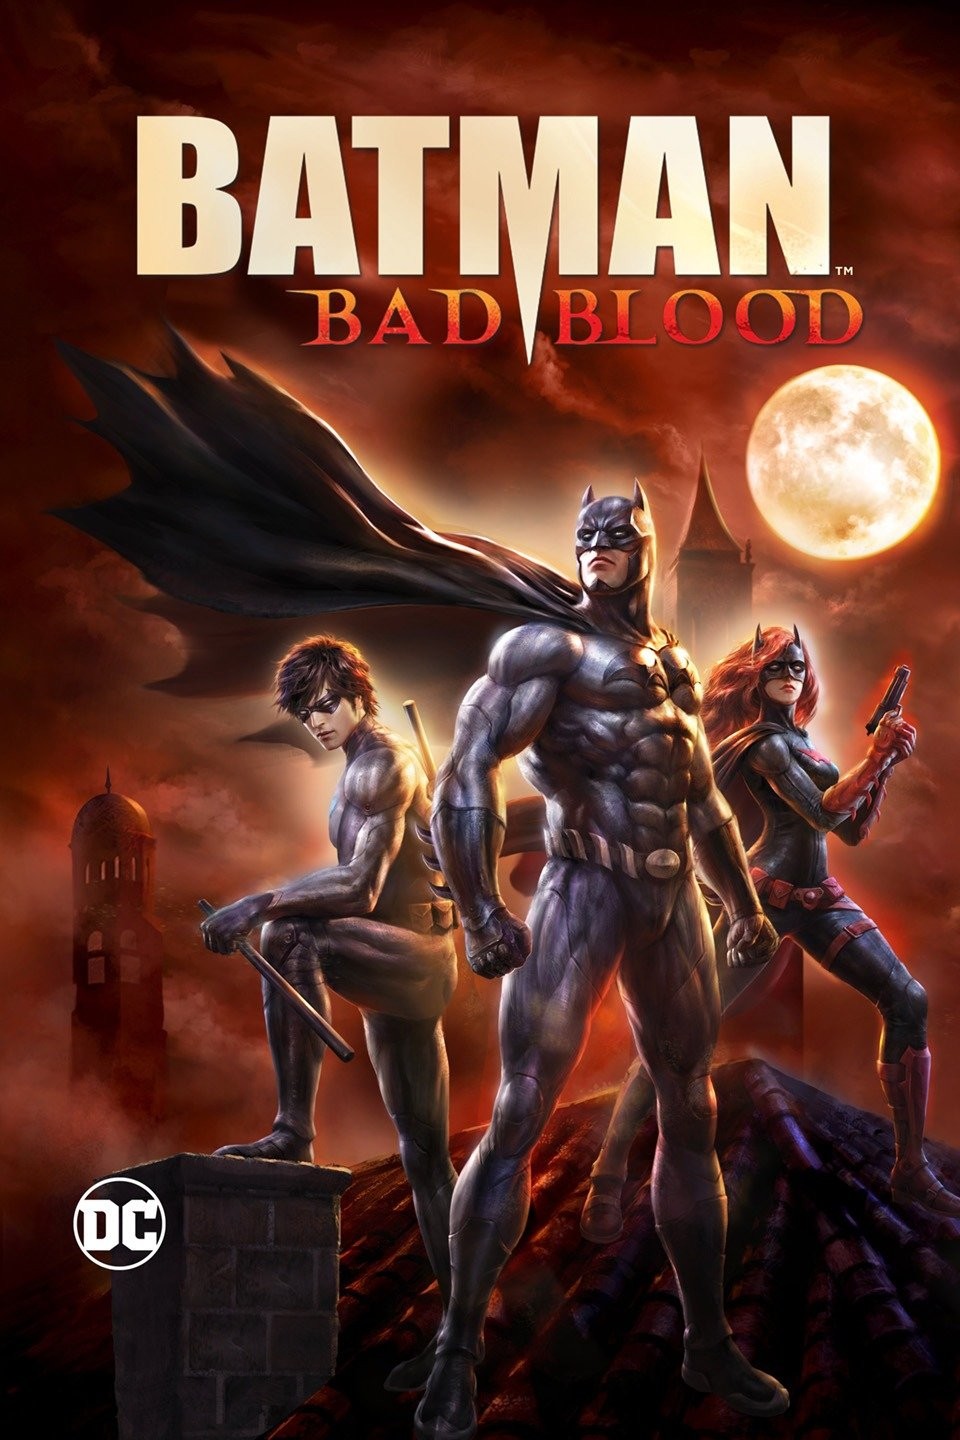 Good Girl, Bad Blood Book Trailer 